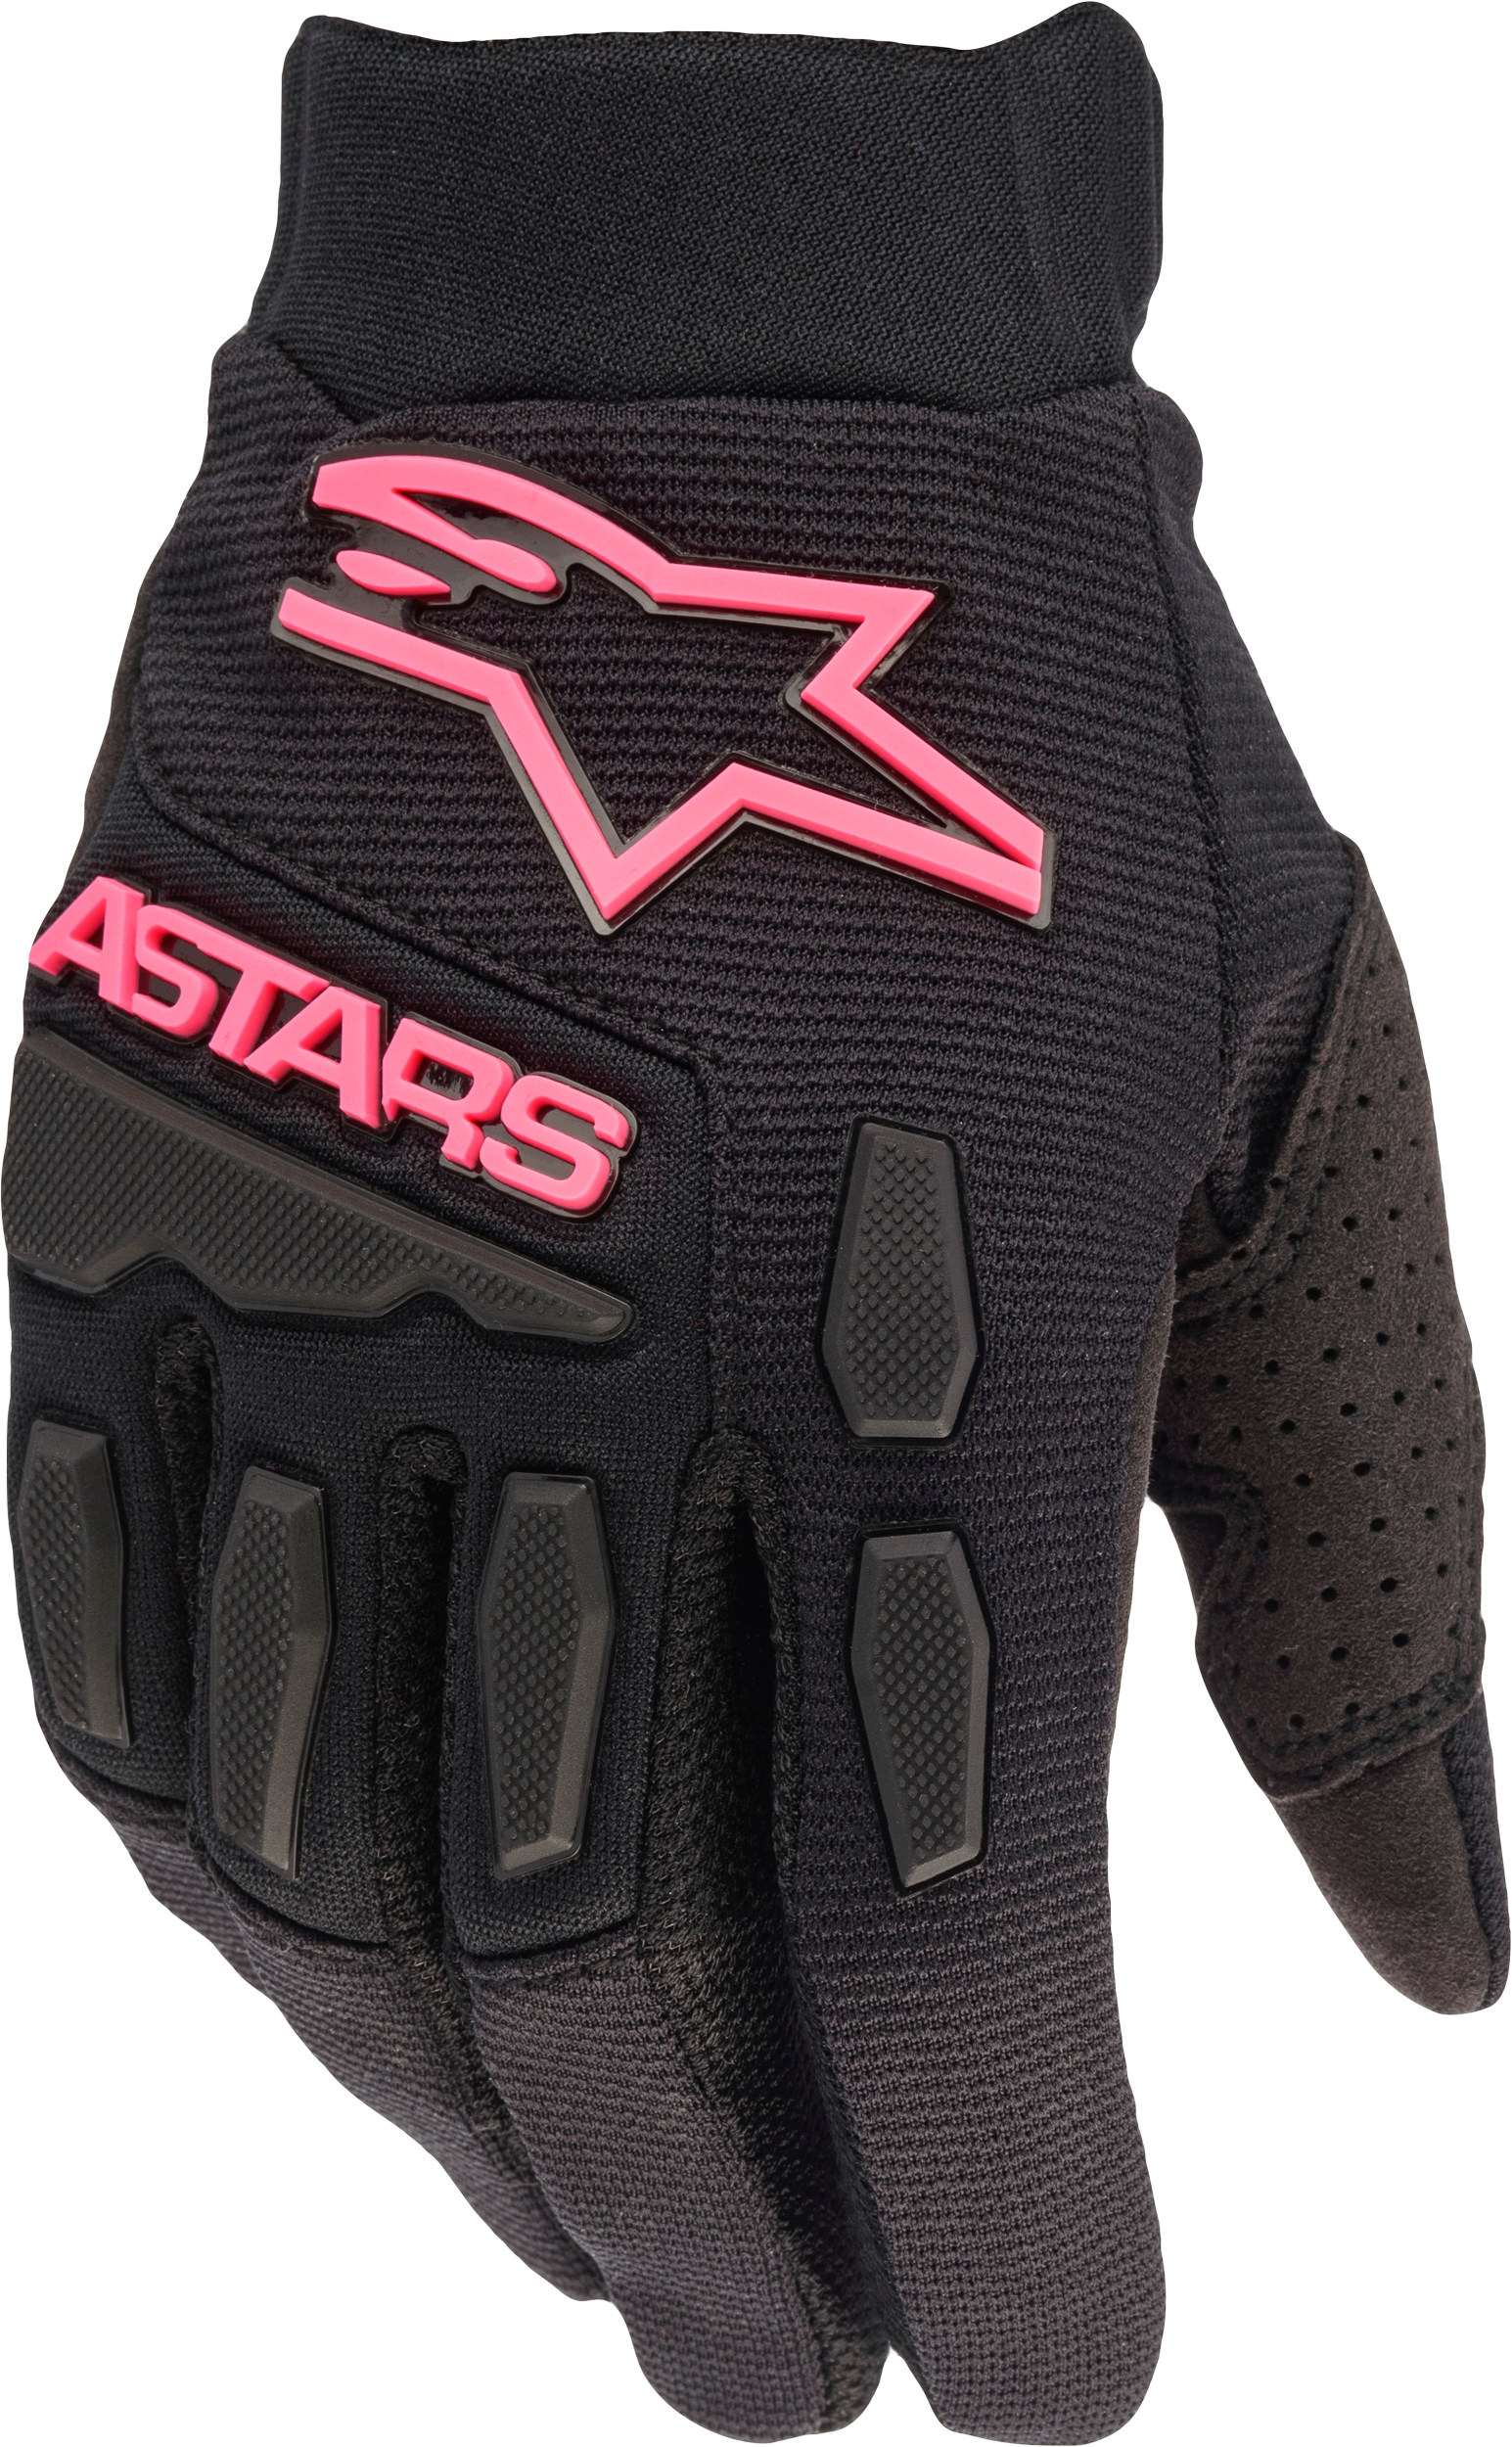 Alpinestars Stella Full Bore Gloves Black/Fluorescent Pink X-Large 3583622-1390-Xl